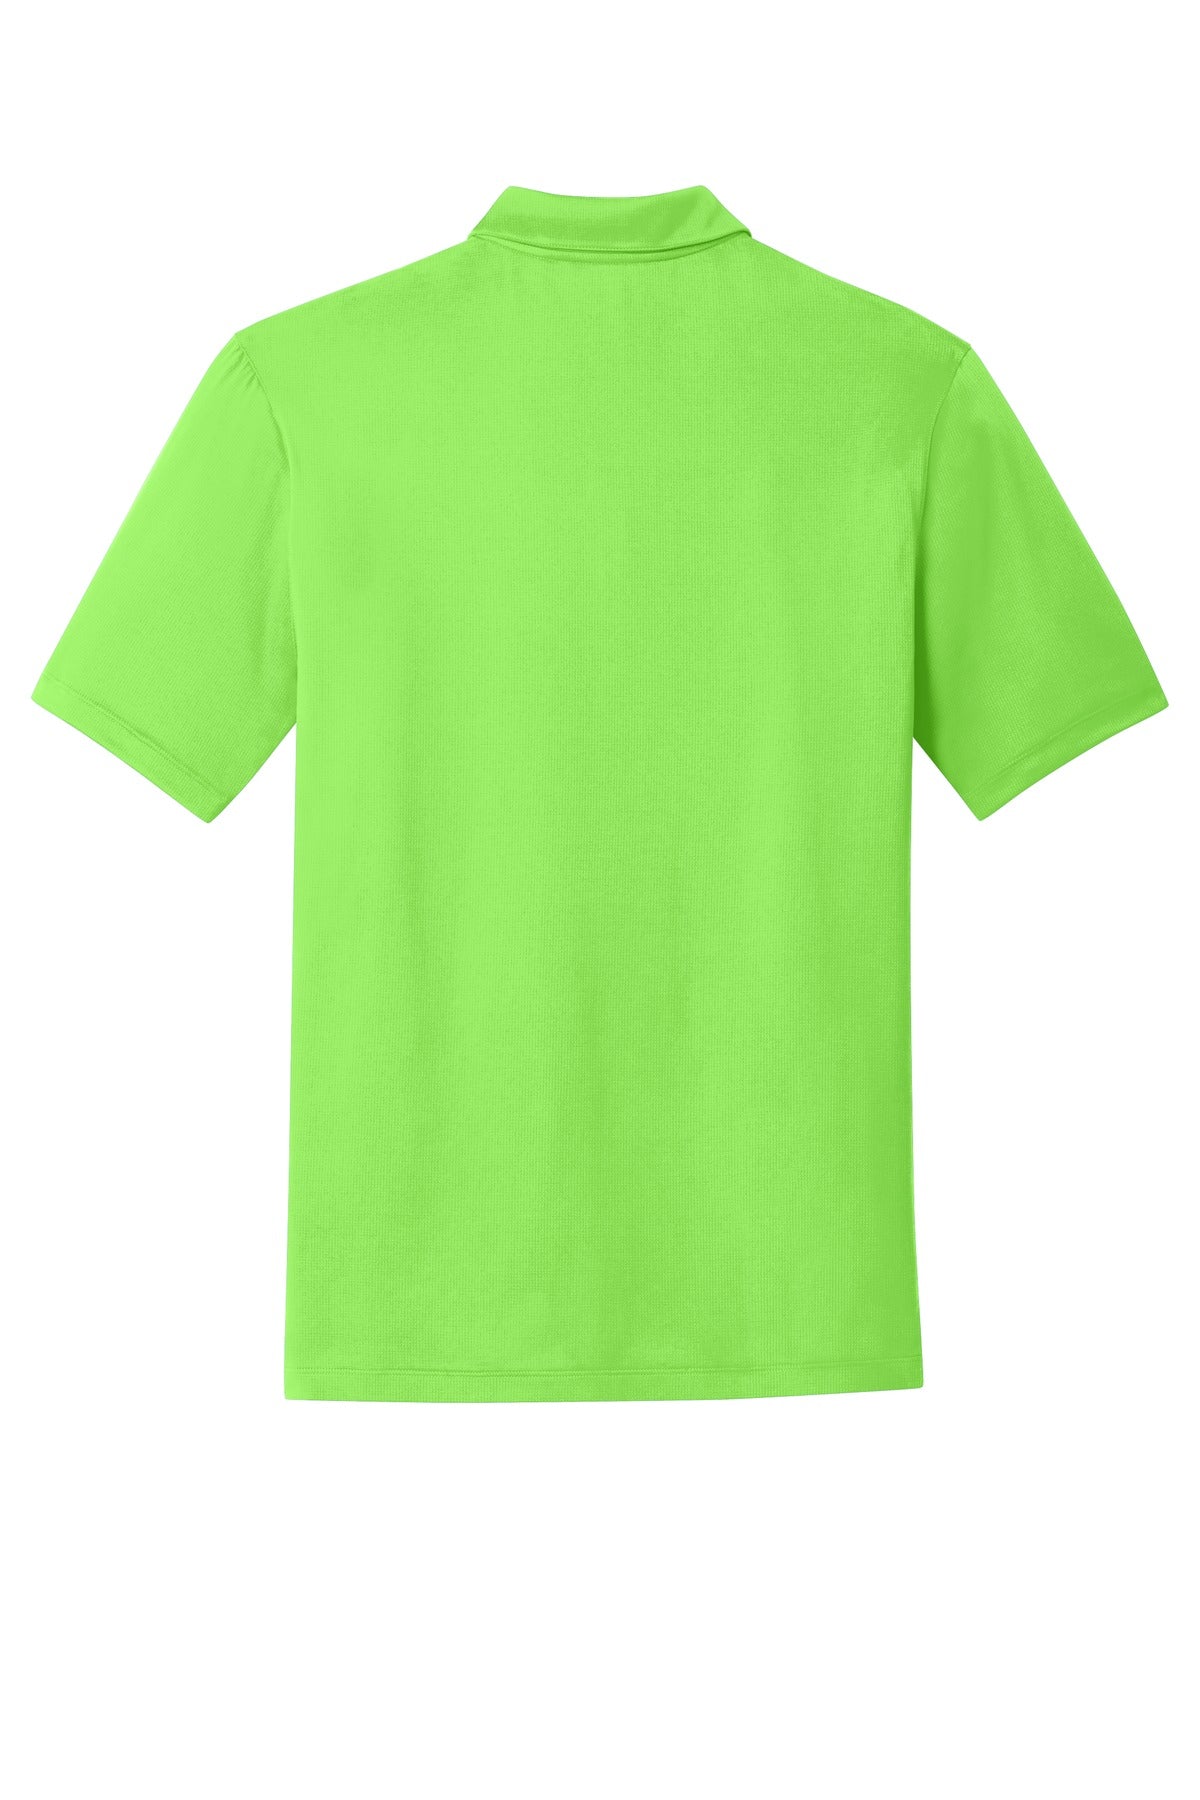 Nike Dri-FIT Legacy Polo. 883681 - BT Imprintables Shirts